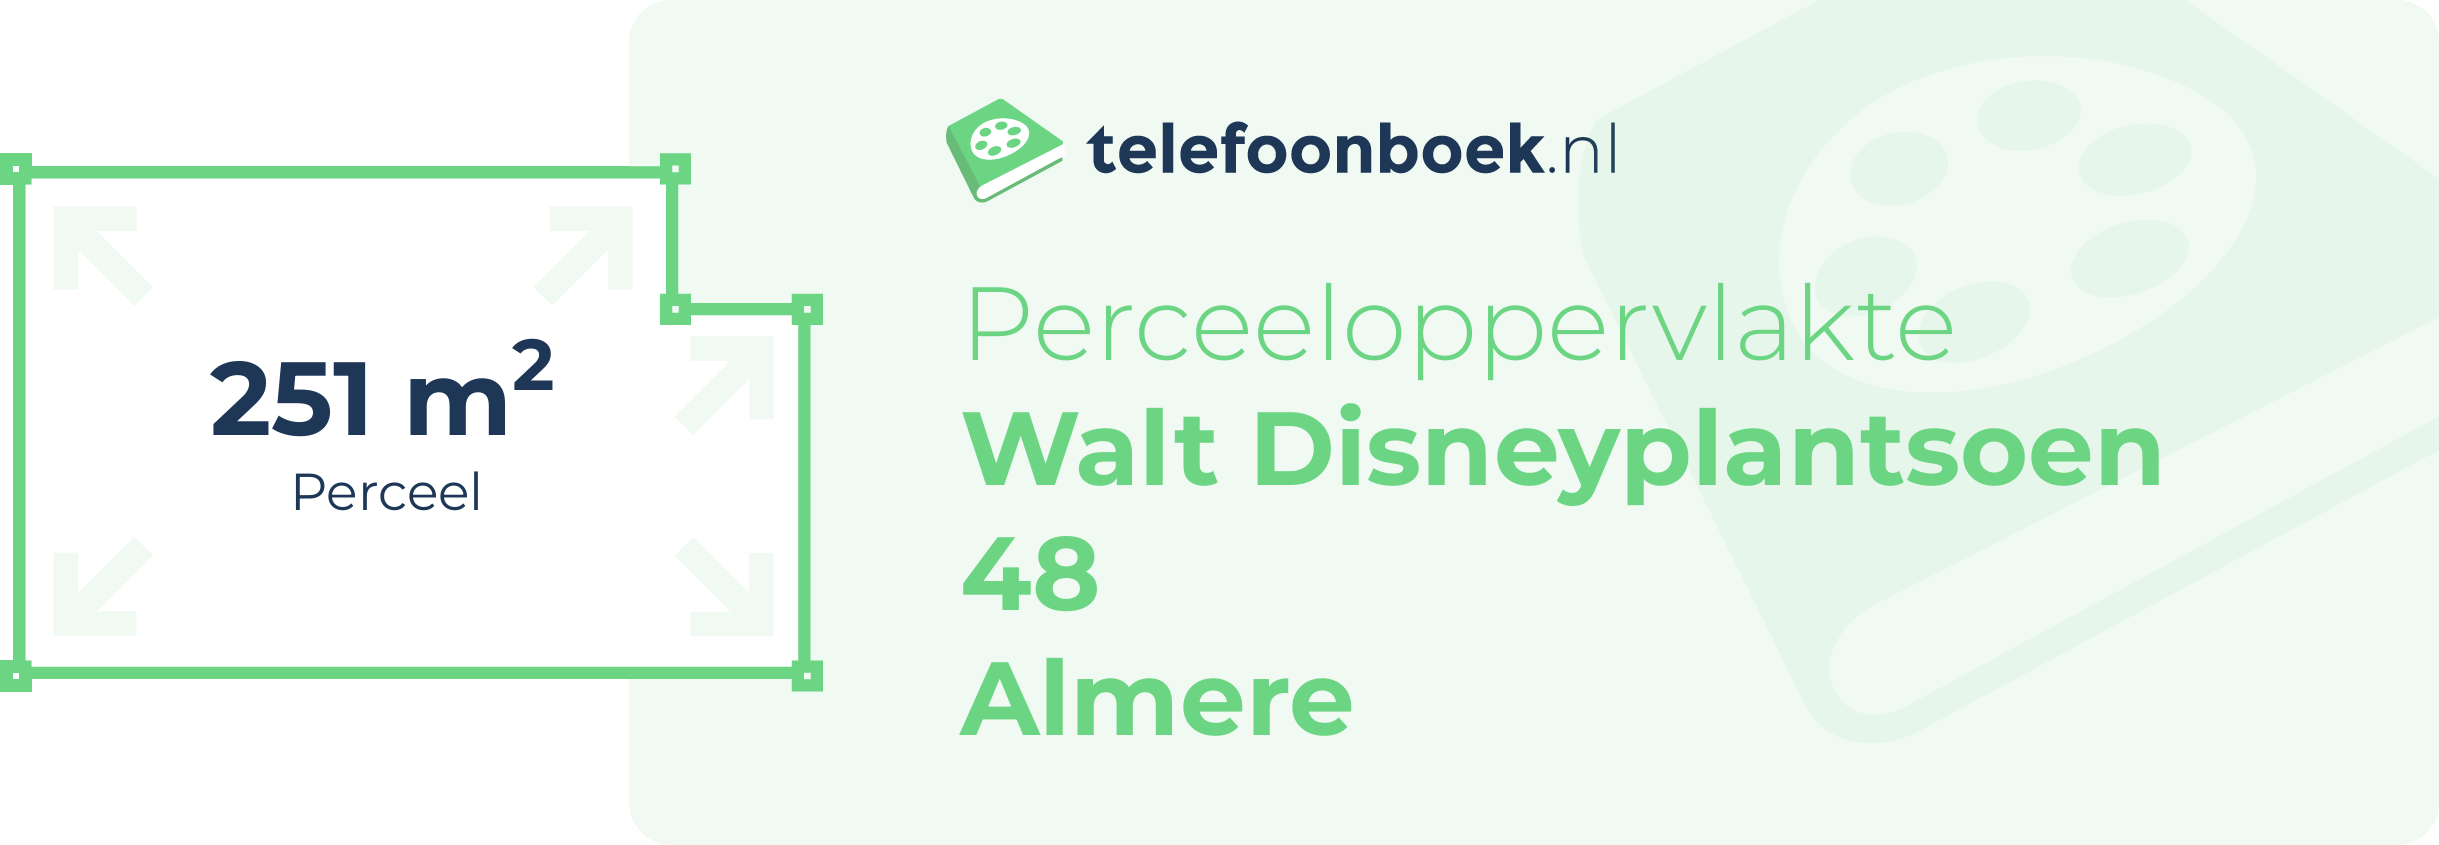 Perceeloppervlakte Walt Disneyplantsoen 48 Almere